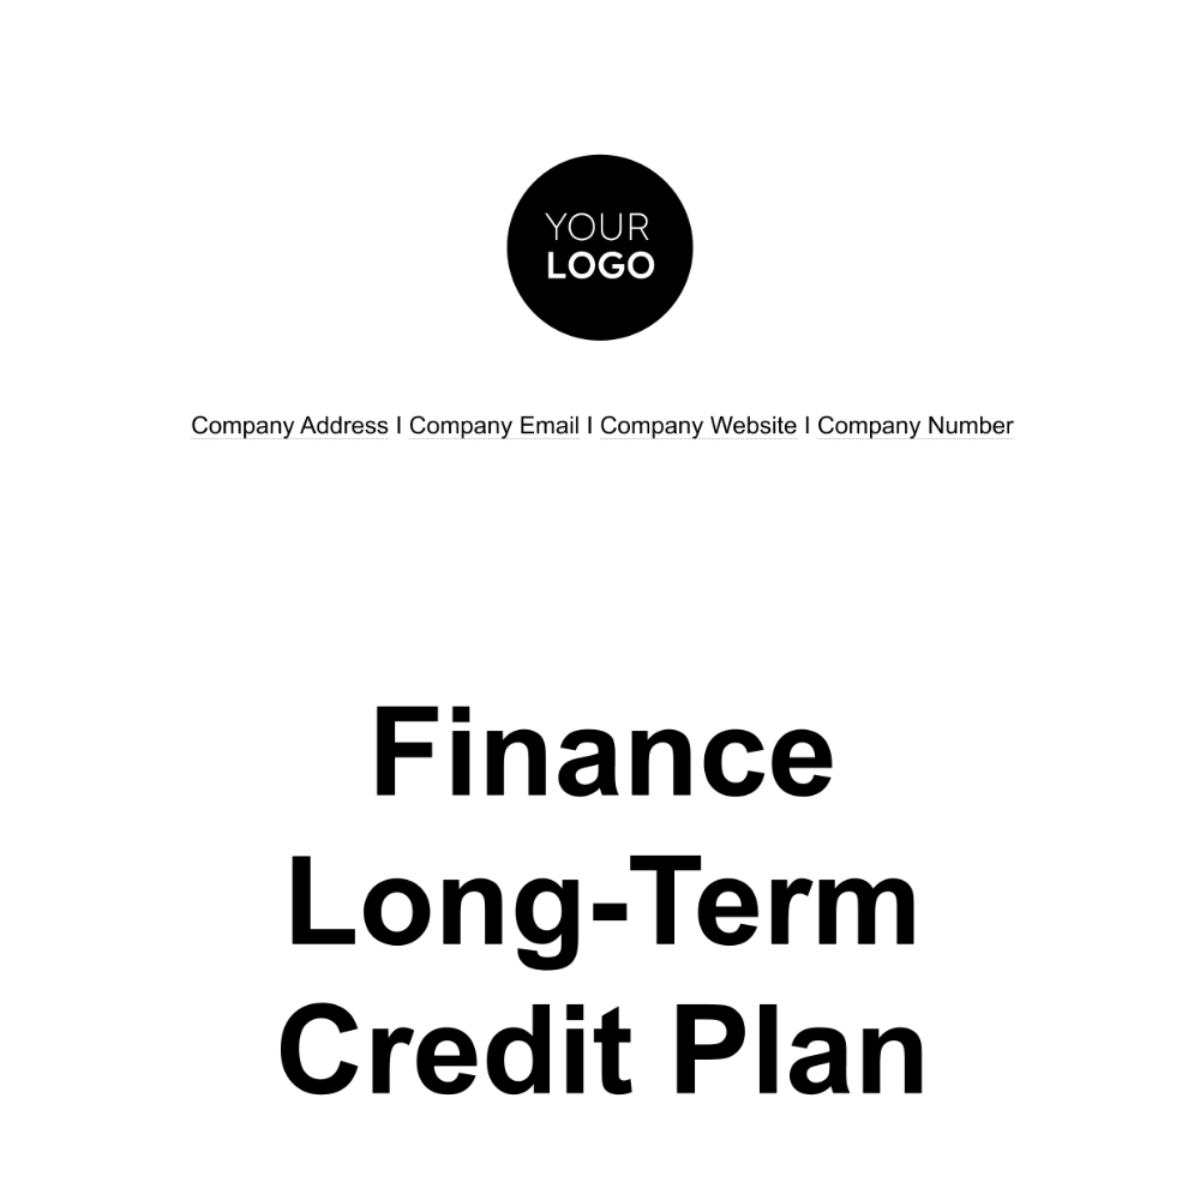 Finance Long-Term Credit Plan Template